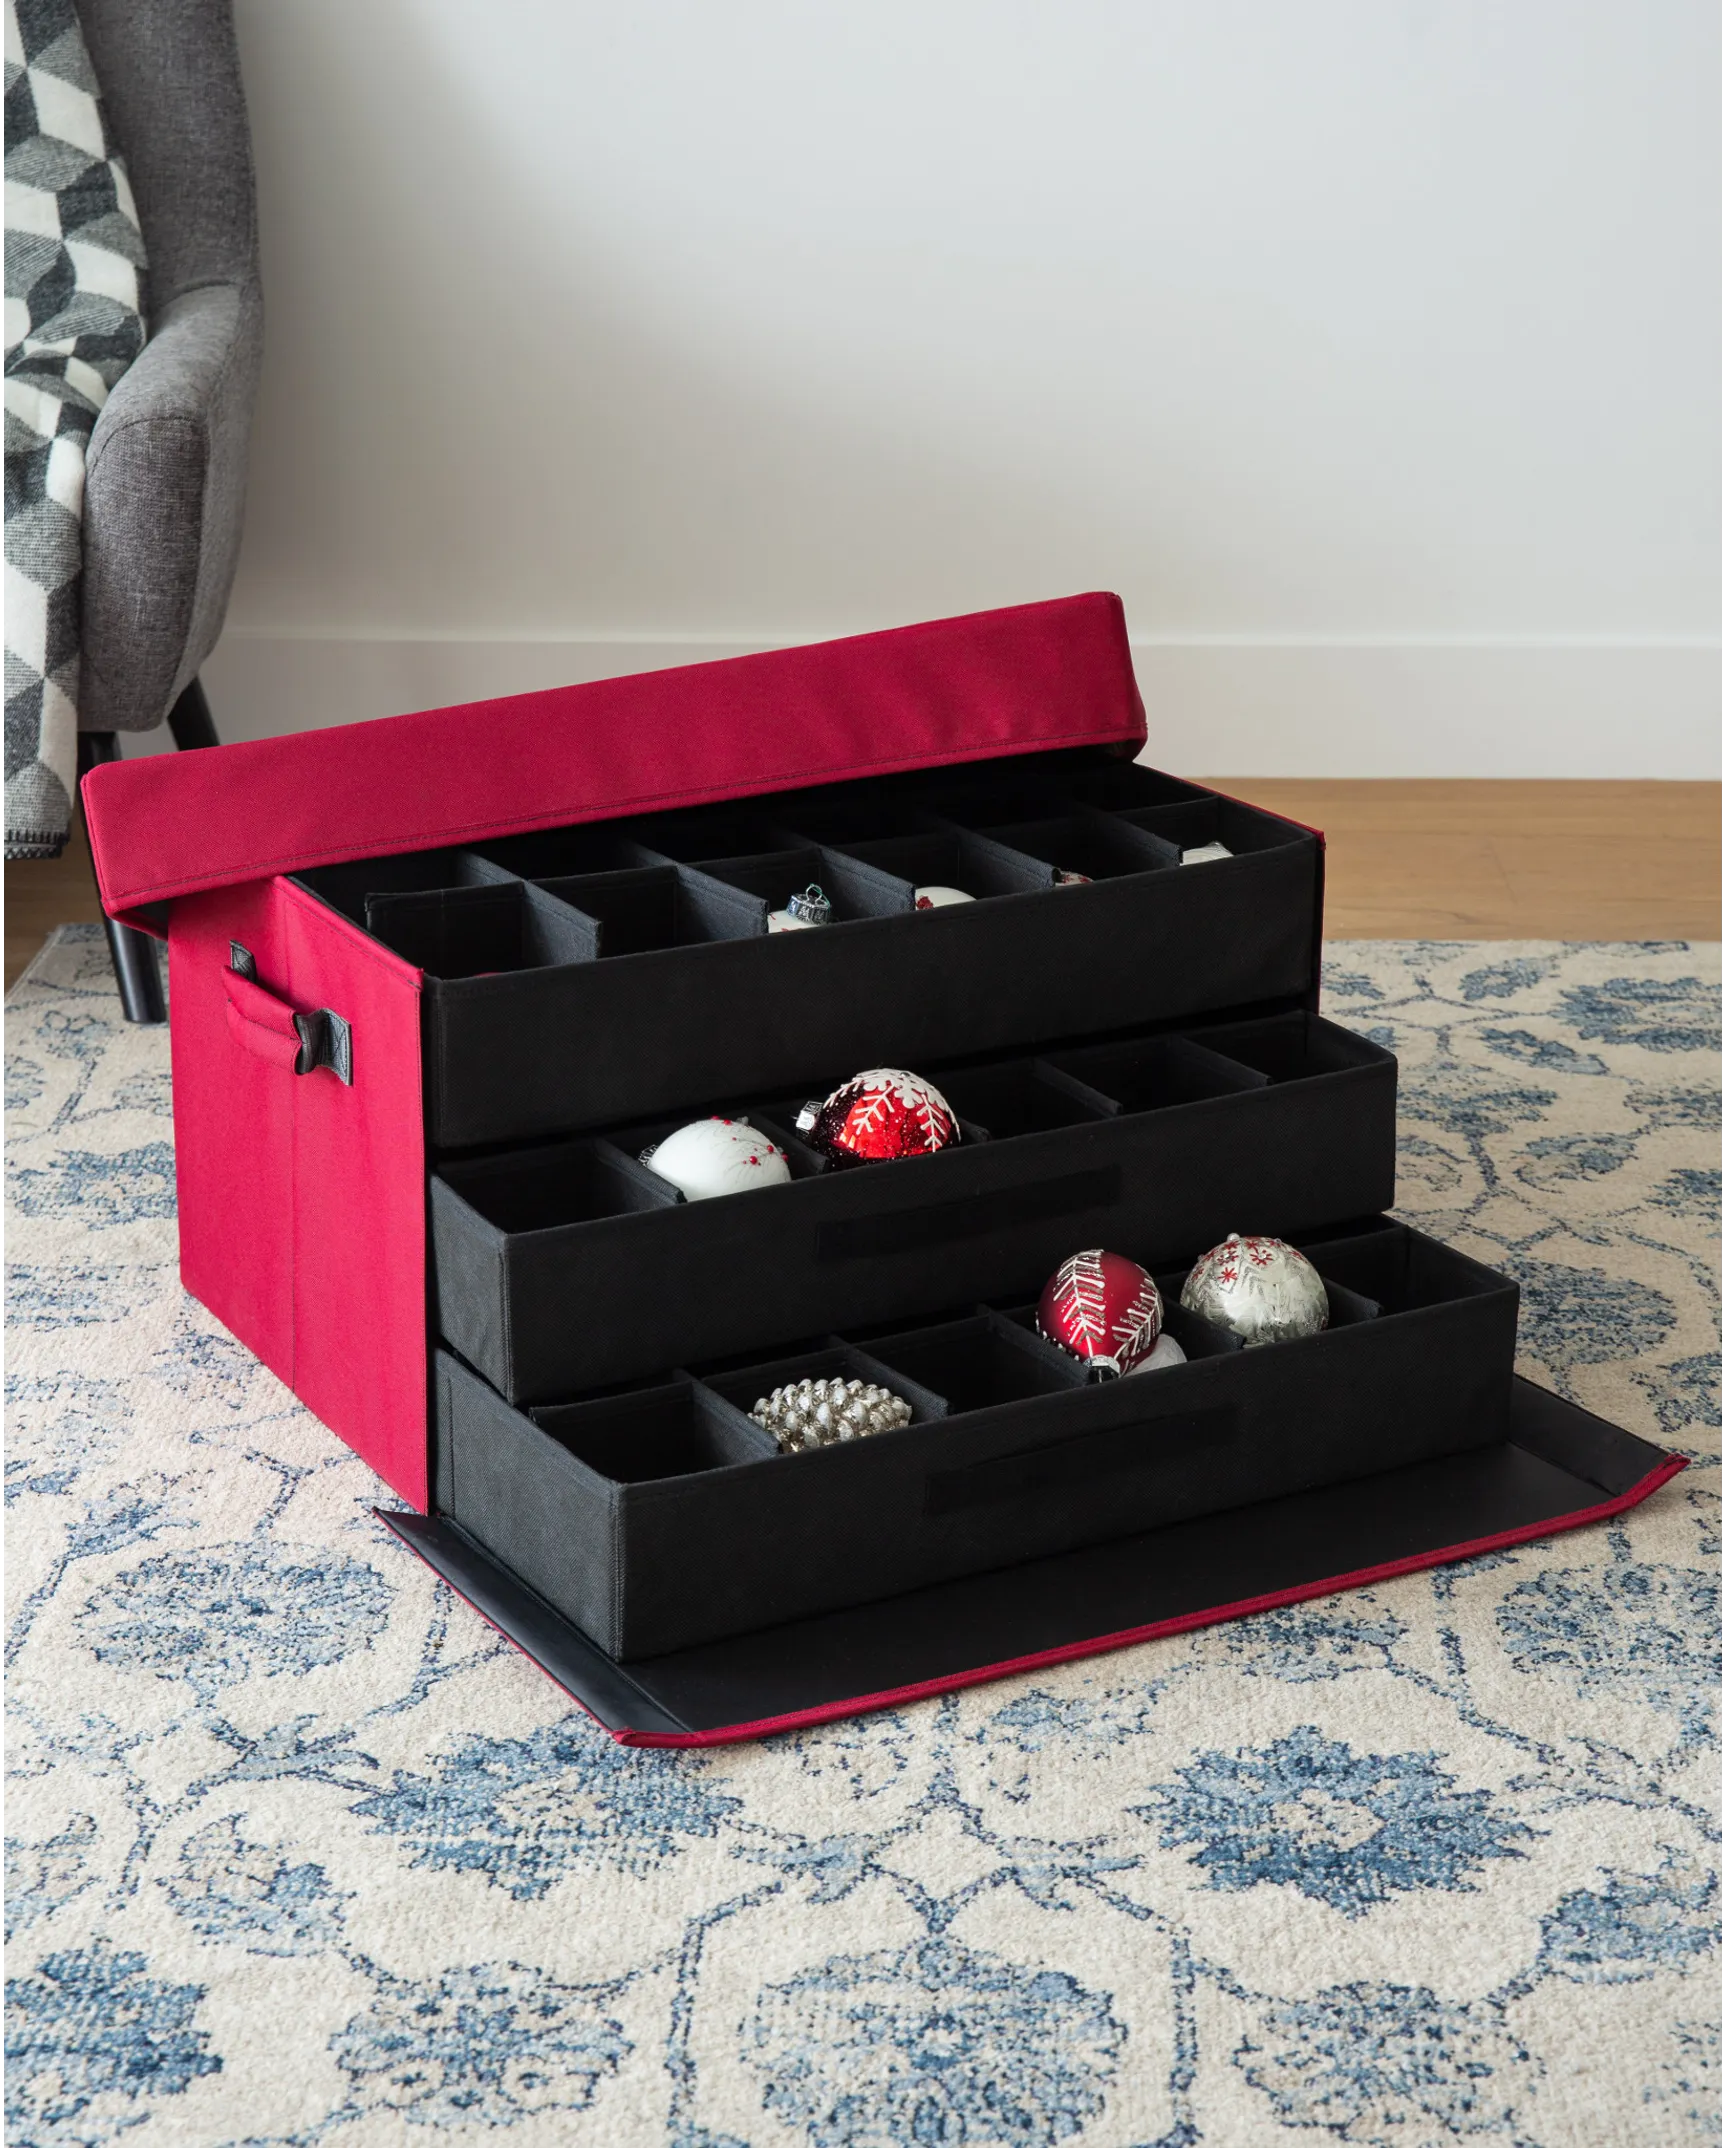 Custom Ornament Boxes  Christmas Ornament Storage Box